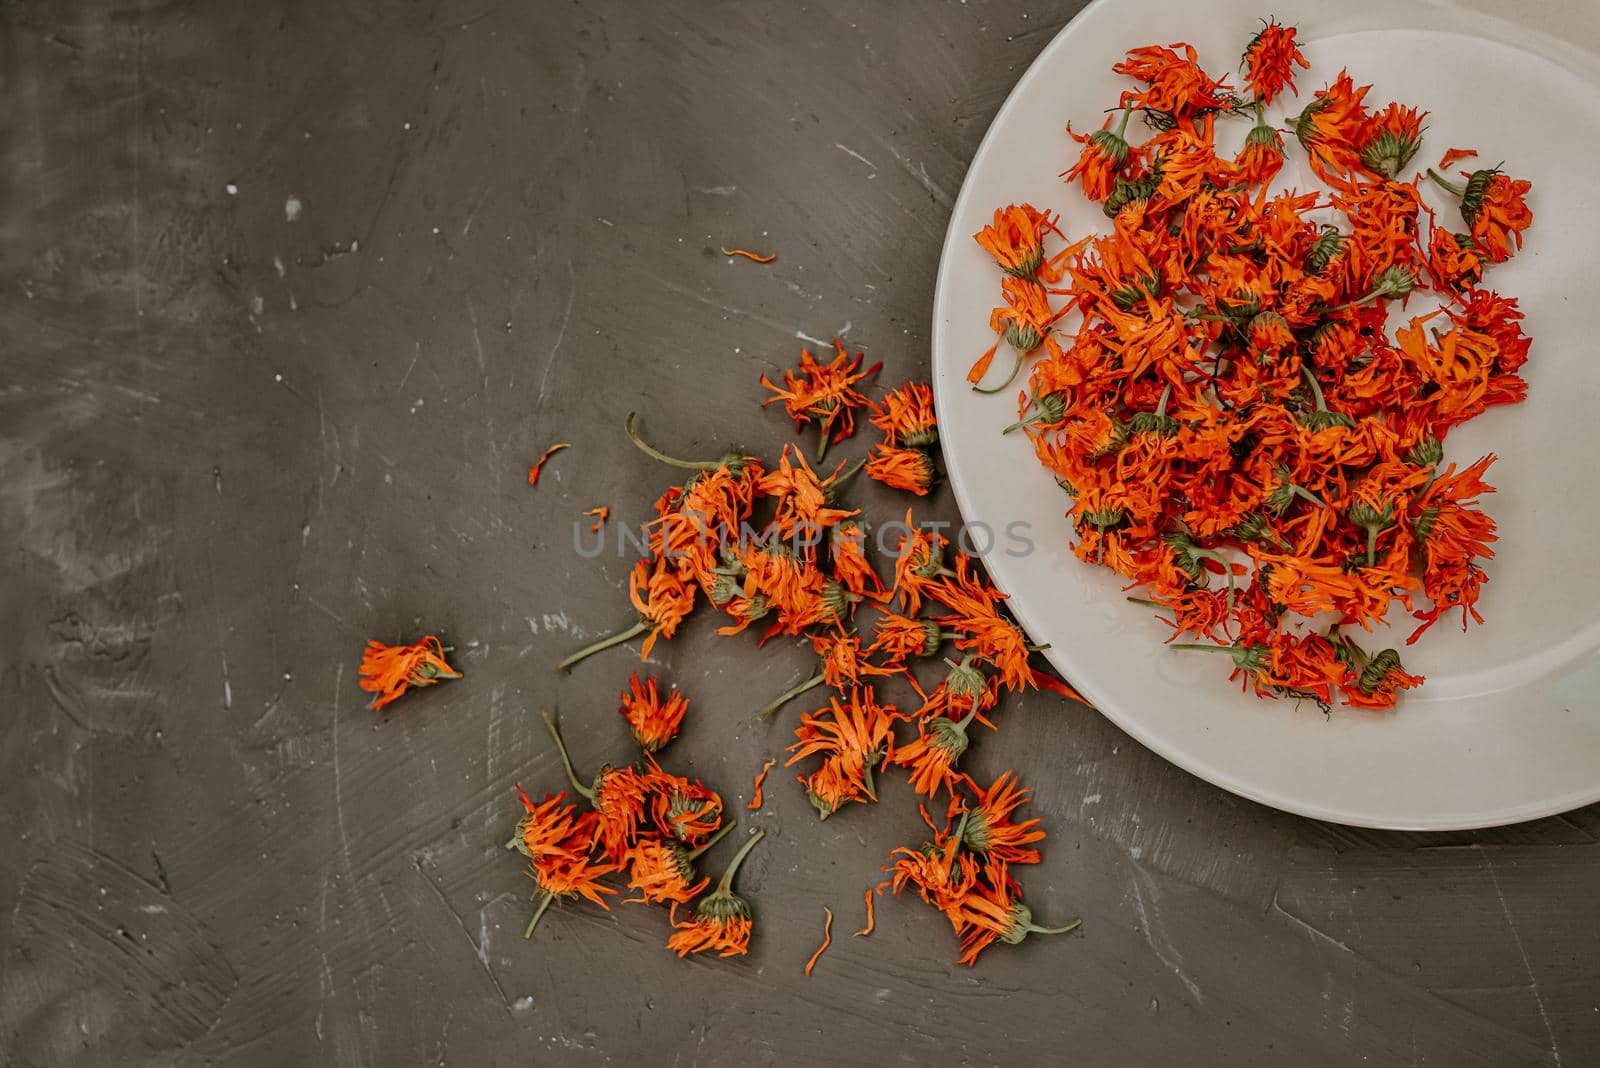 Dried flowers in a gray plate, orange calendula. by AndriiDrachuk